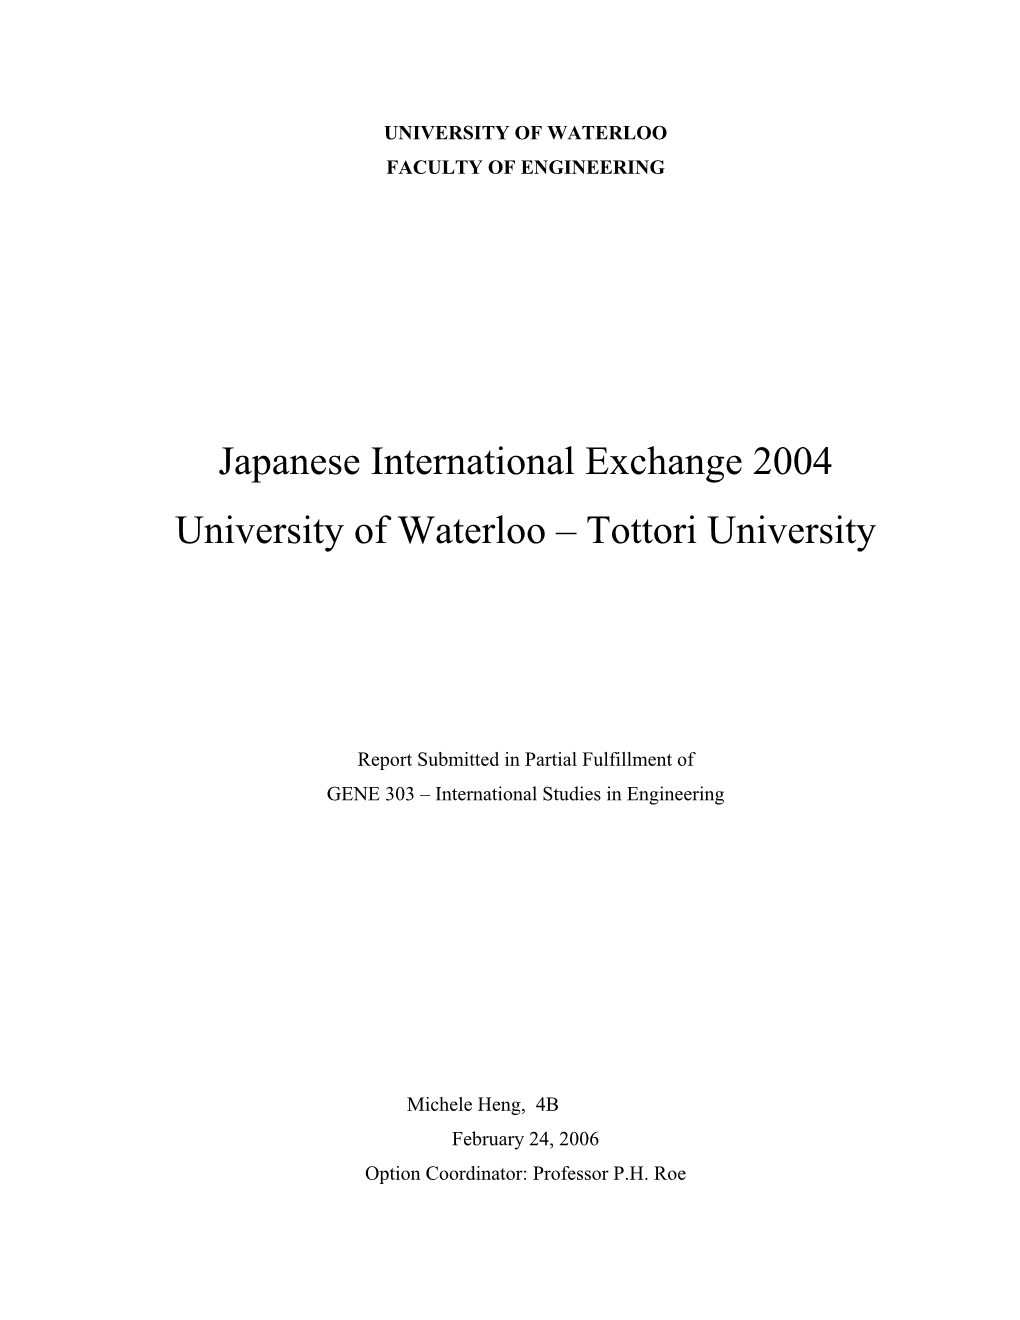 Japanese International Exchange 2004 University of Waterloo – Tottori University